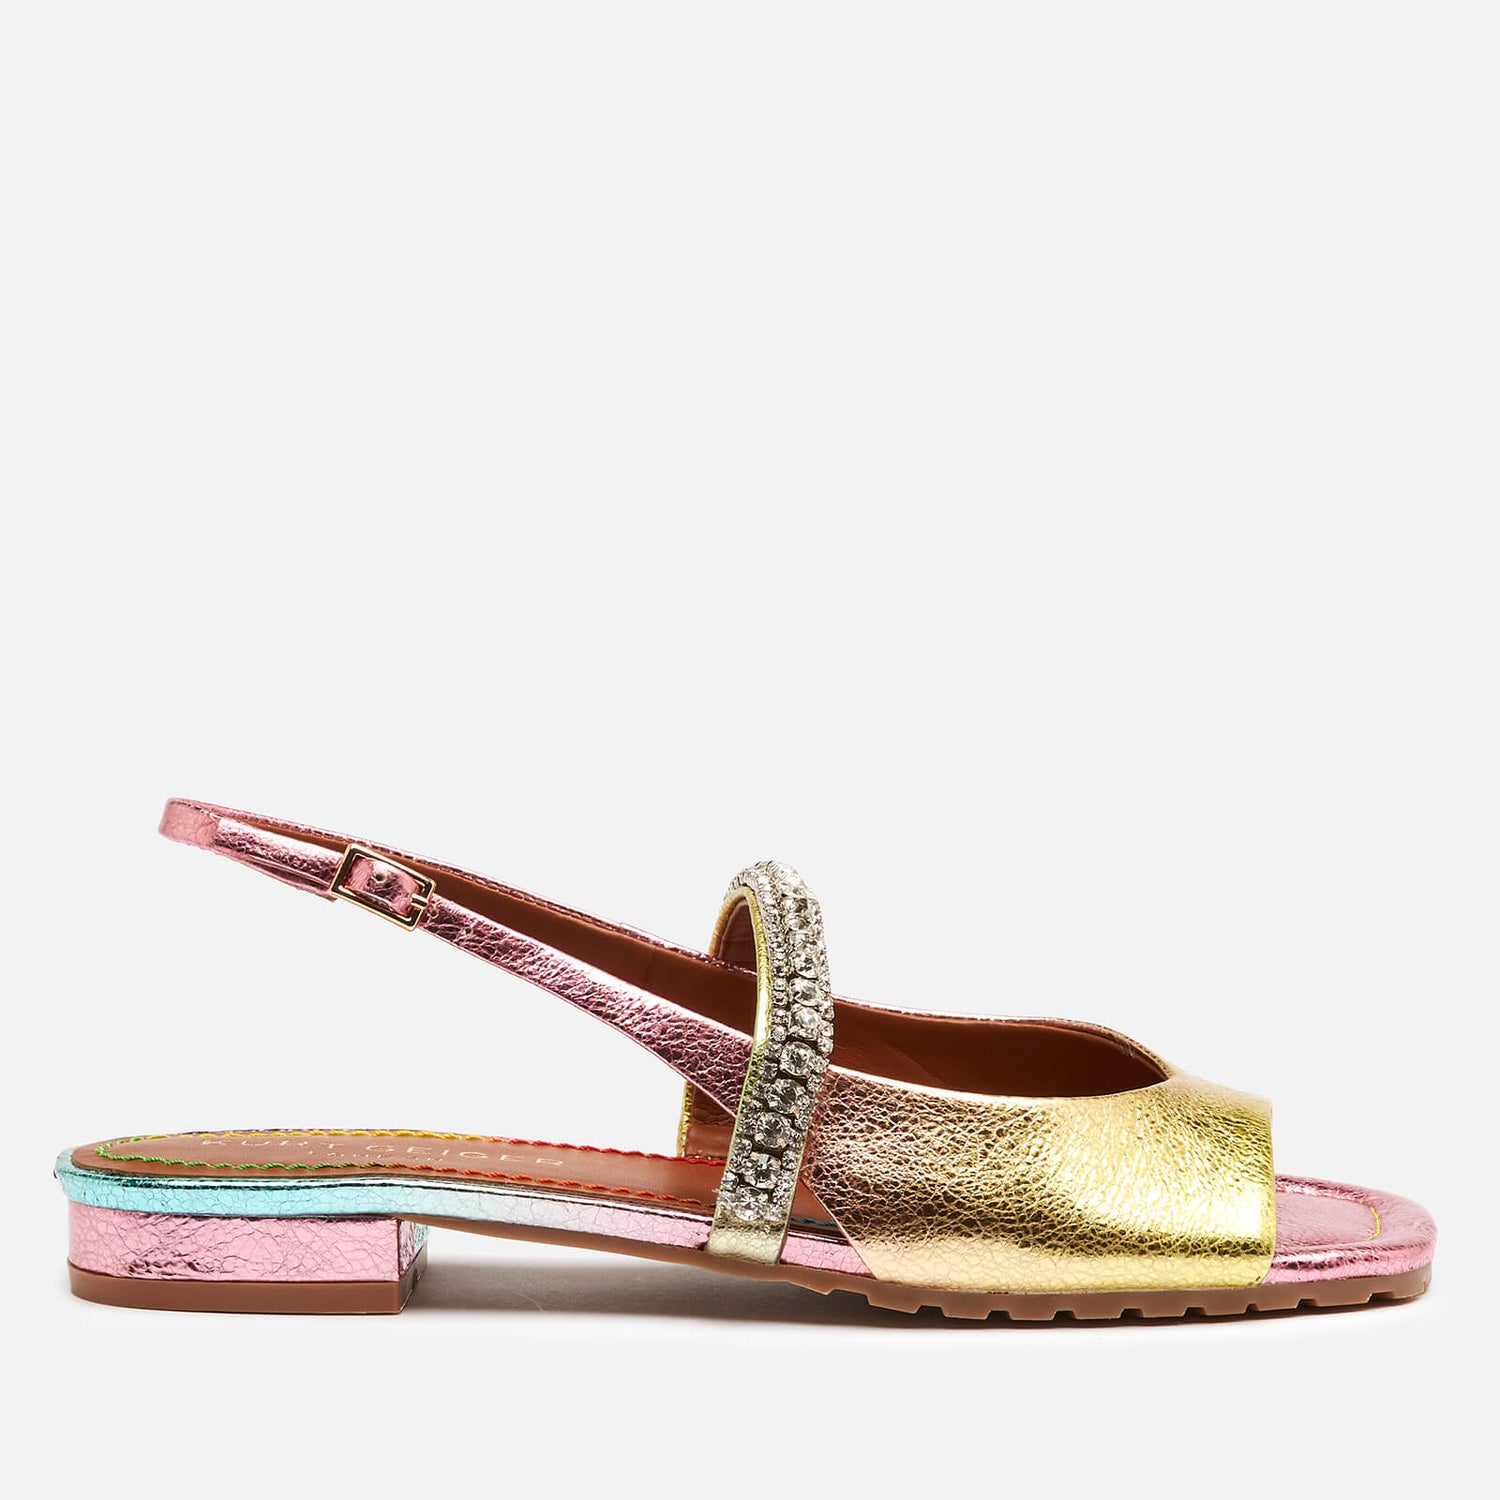 Kurt Geiger London Women's Princeley Leather Sandals - Pink Comb